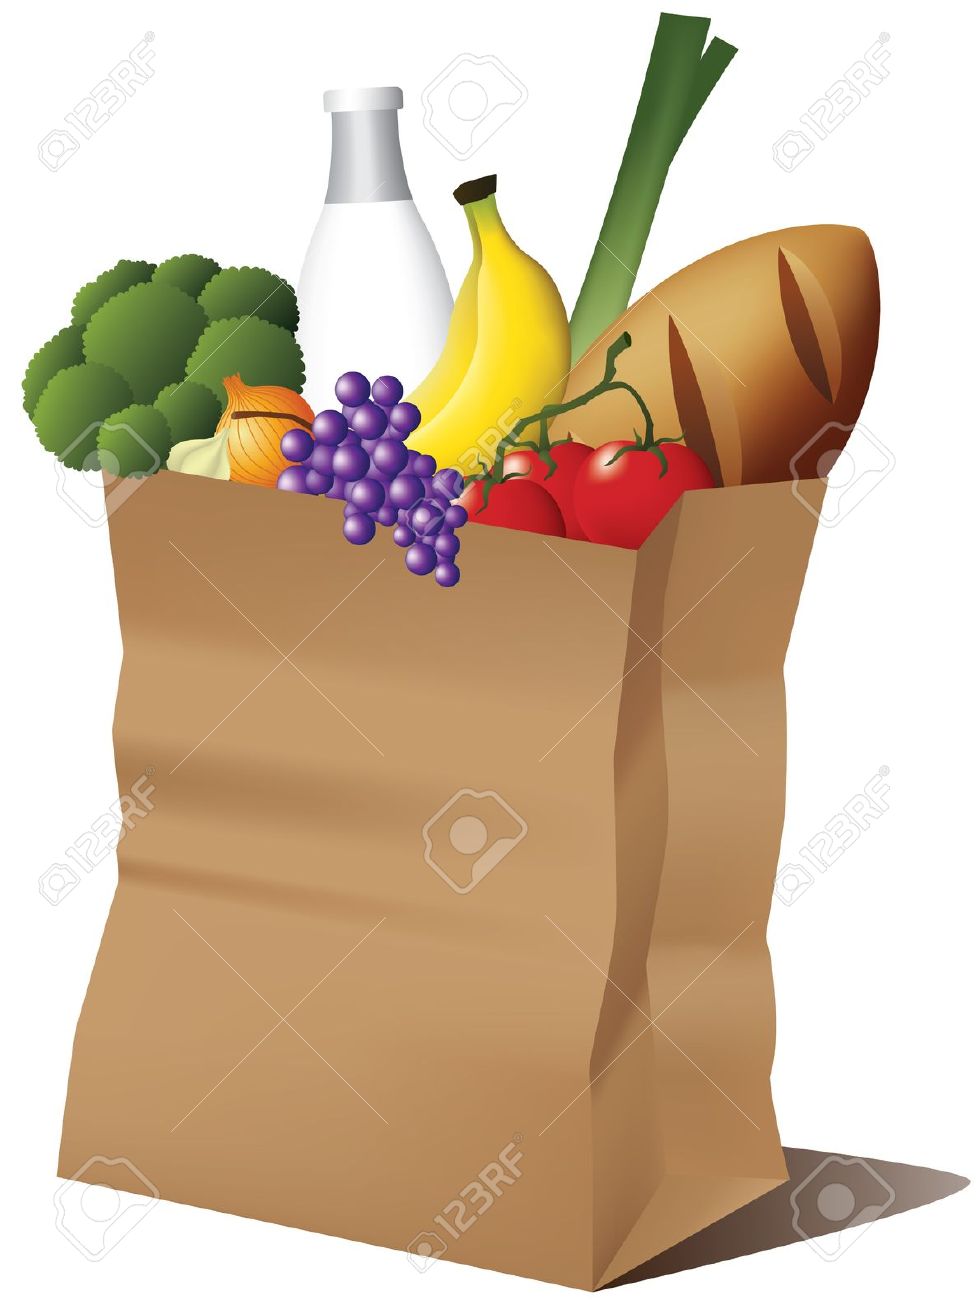 groceries bag: Grocery paper .